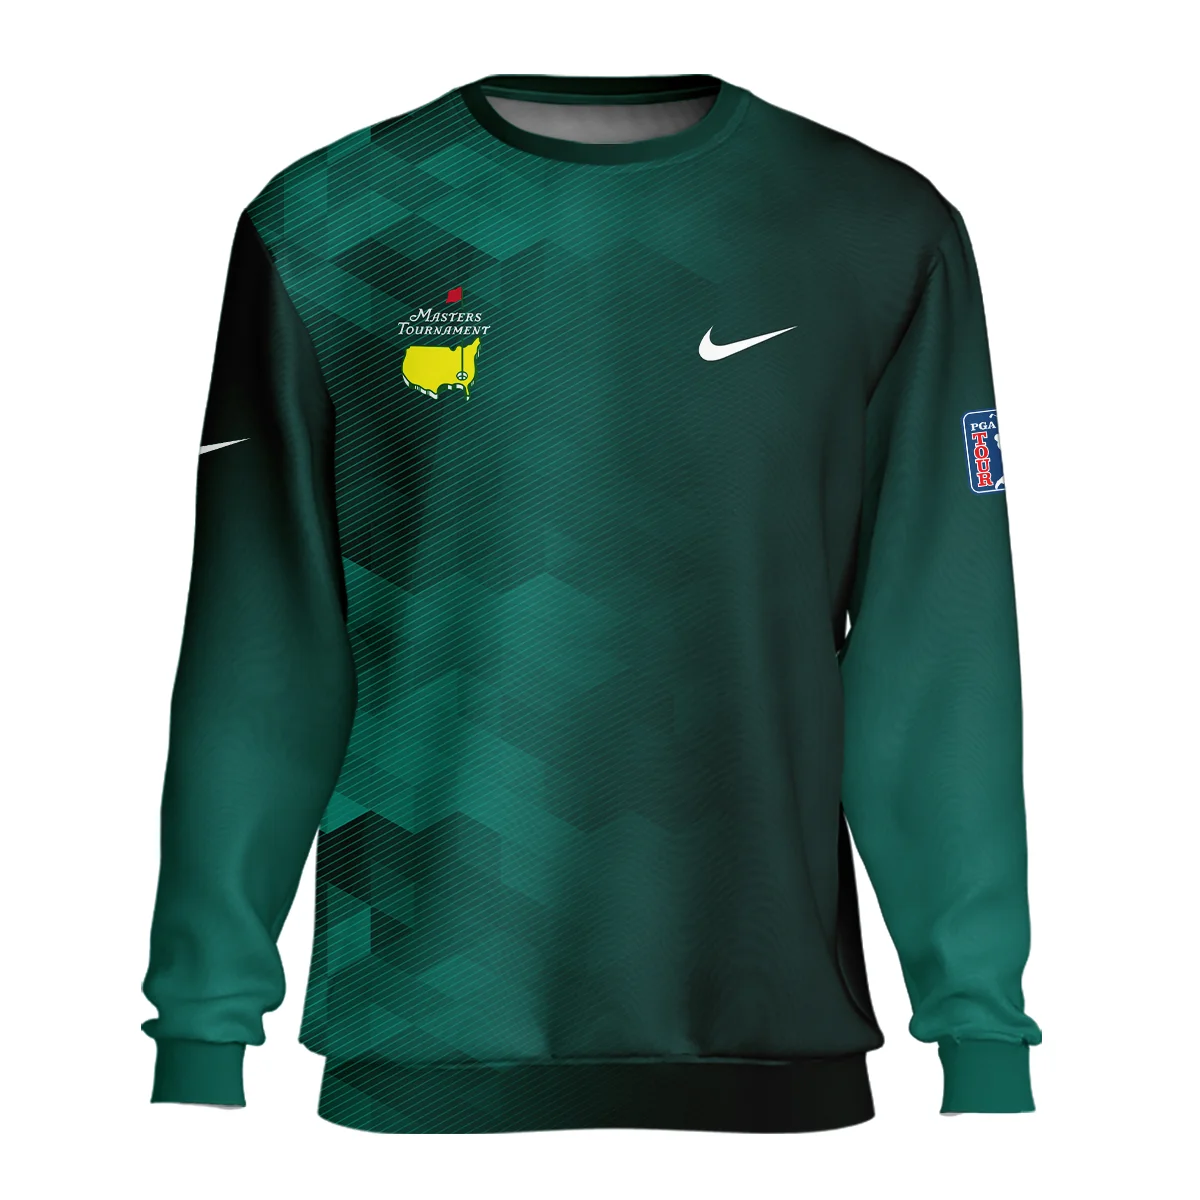 Nike Golf Sport Dark Green Gradient Abstract Background Masters Tournament Unisex Sweatshirt Style Classic Sweatshirt